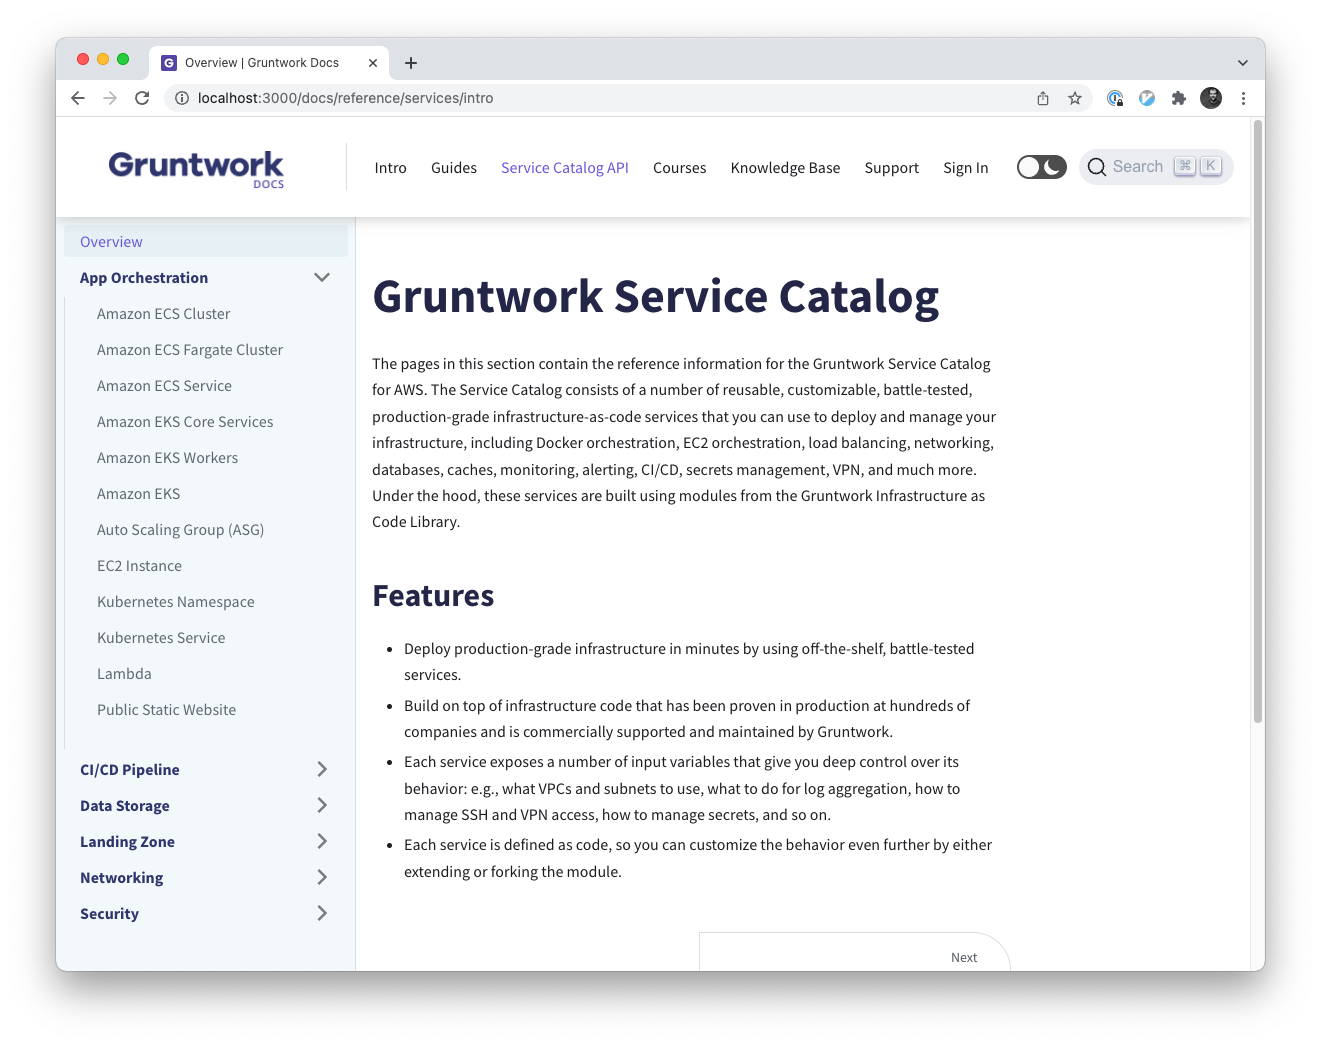 The Gruntwork Service Catalog